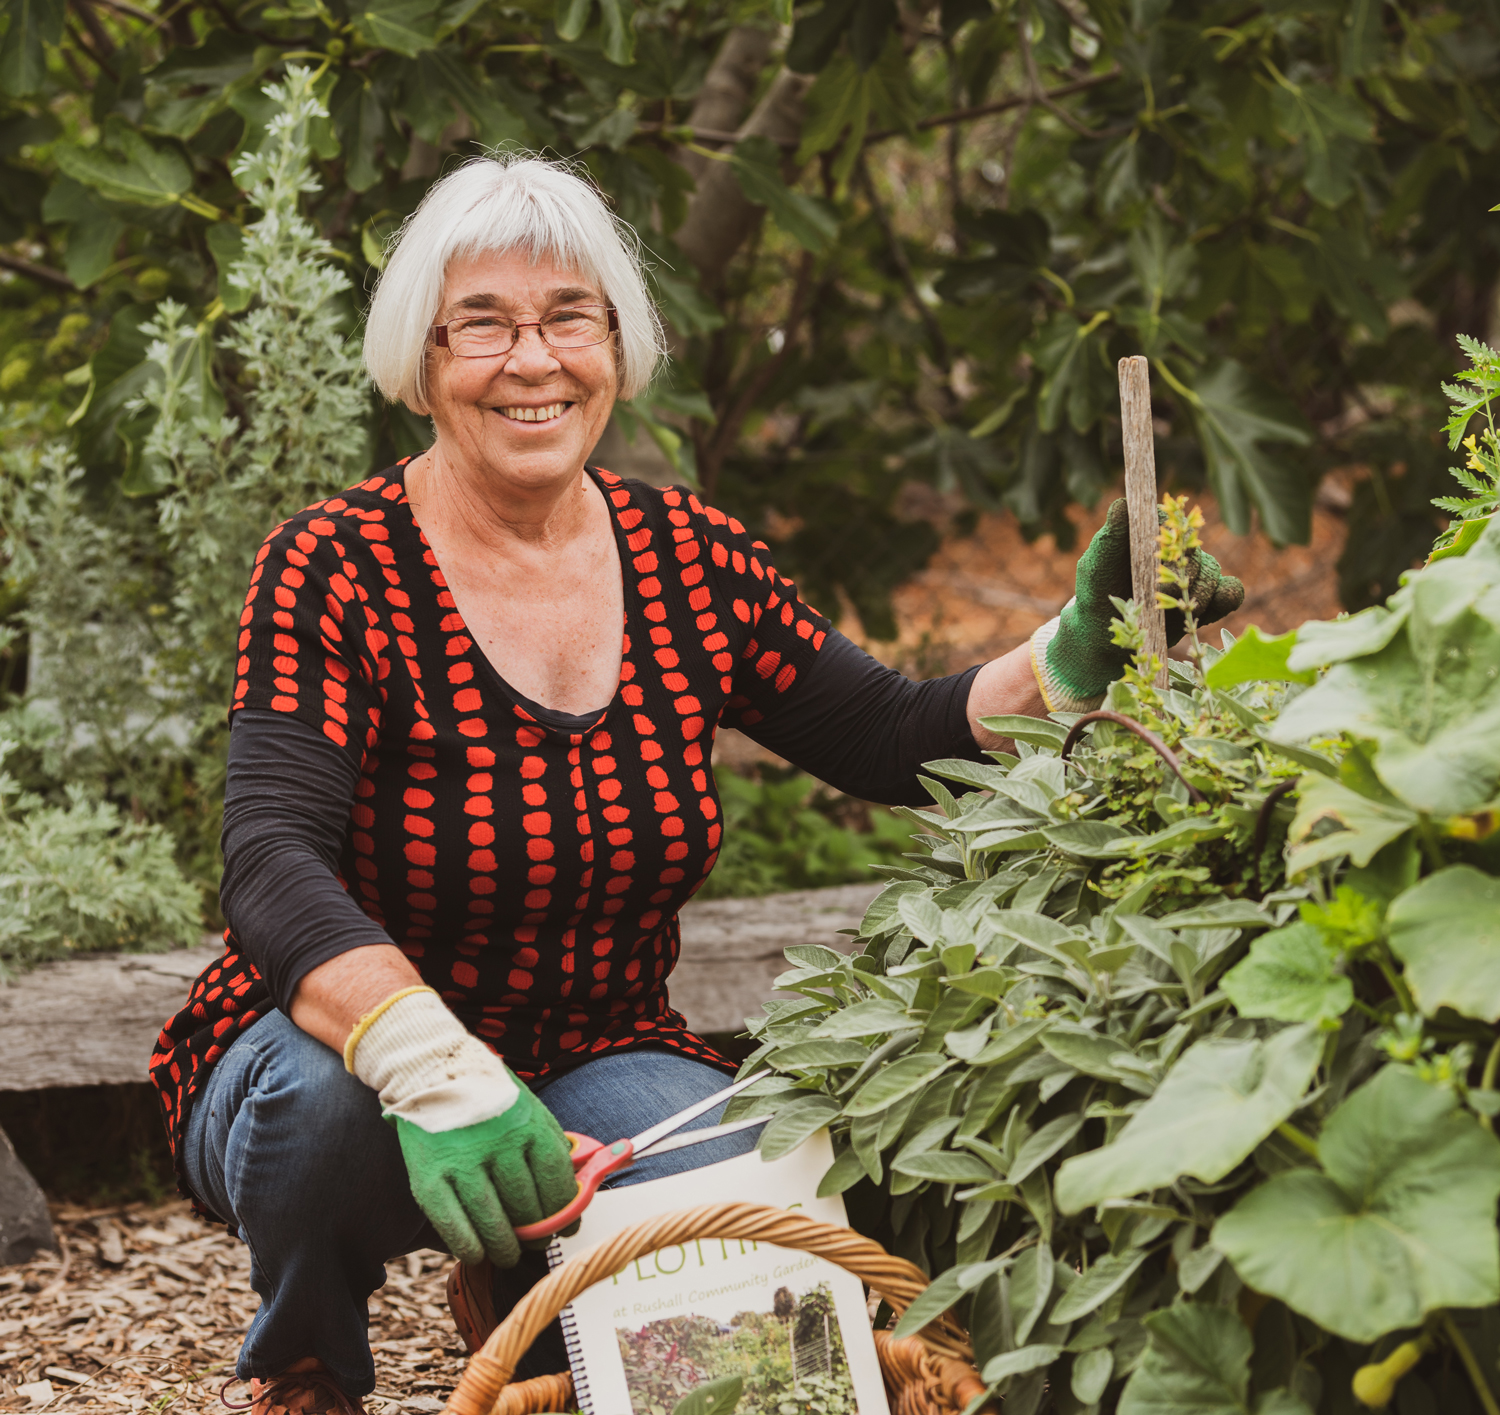 Rushall Garden volunteer Lynda posing in the garden with her new book Plotting